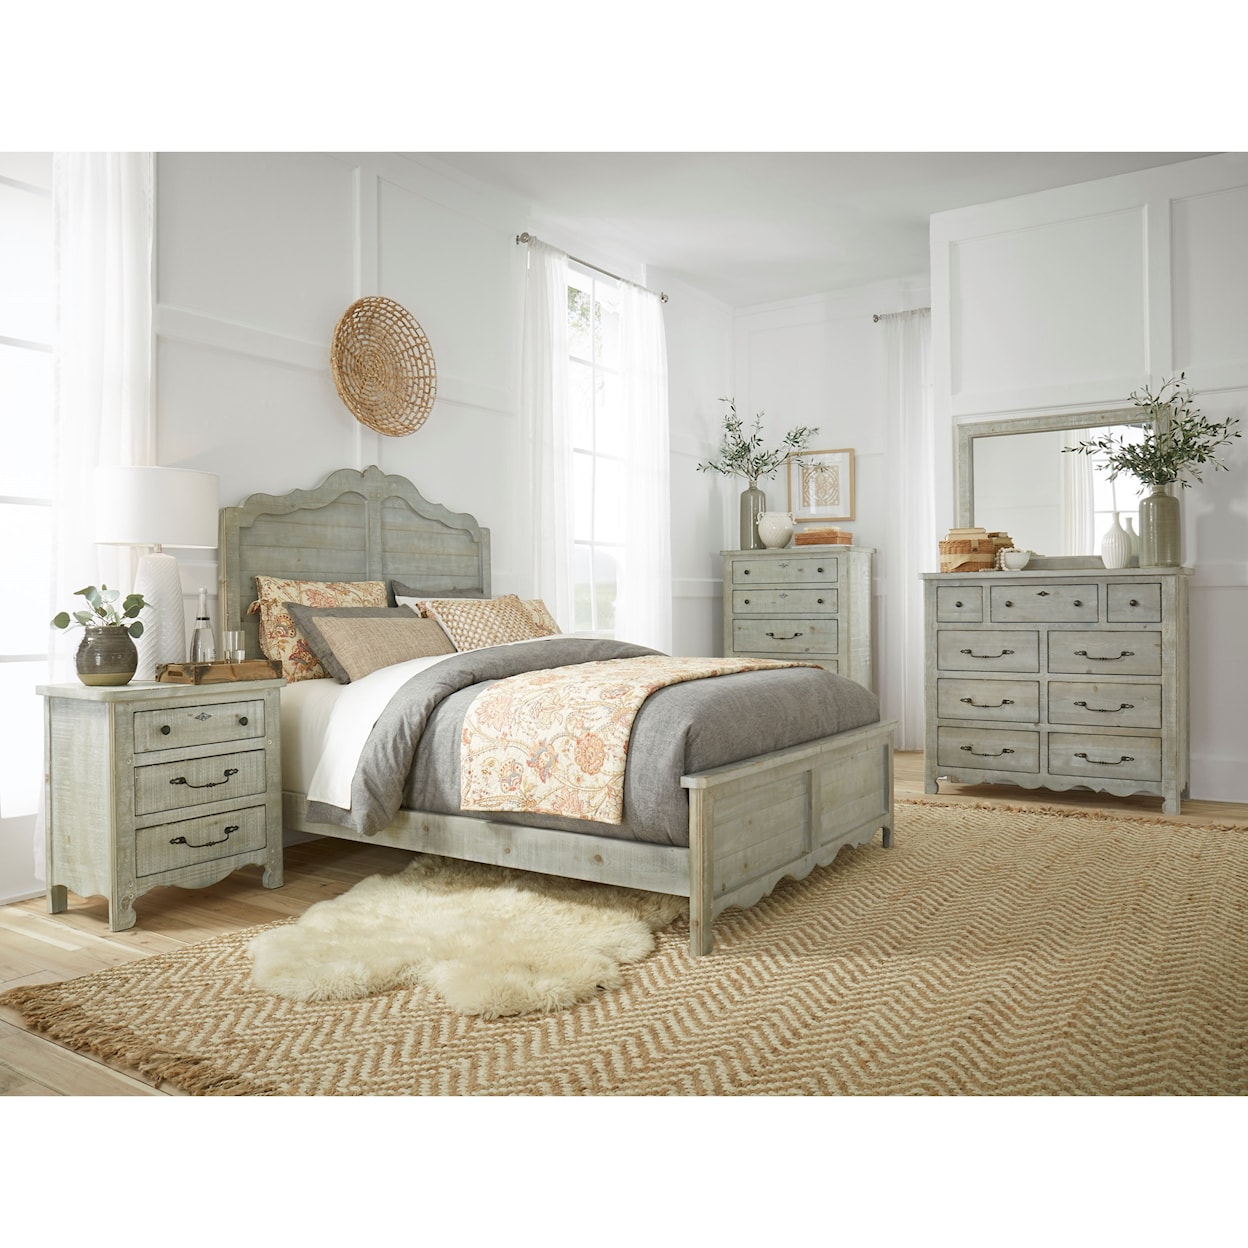 Progressive Furniture Chatsworth Complete King Panel Bed